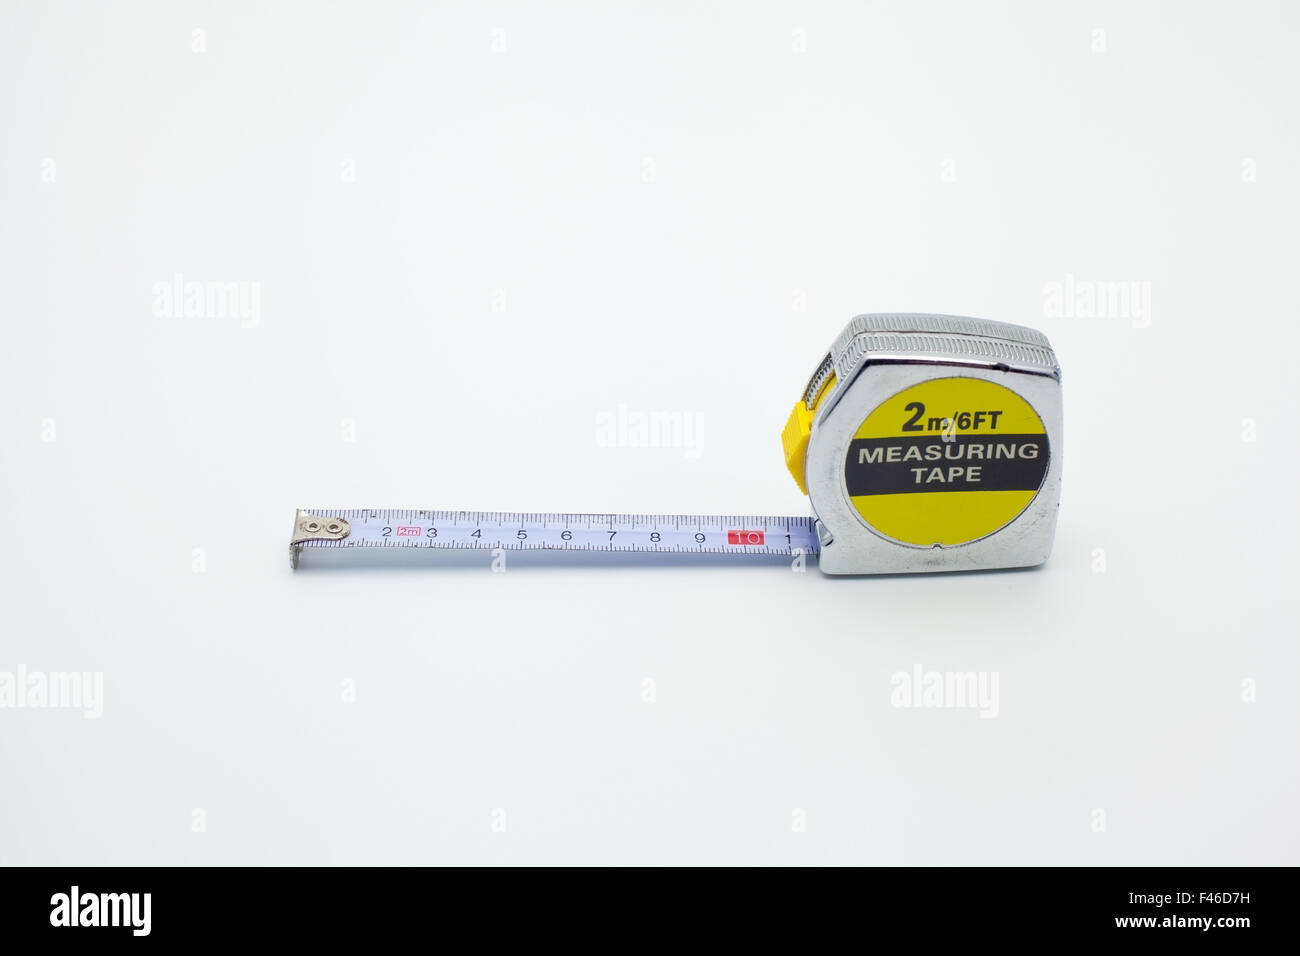 Old 2 feet/meter measuring tape Stock Photo - Alamy